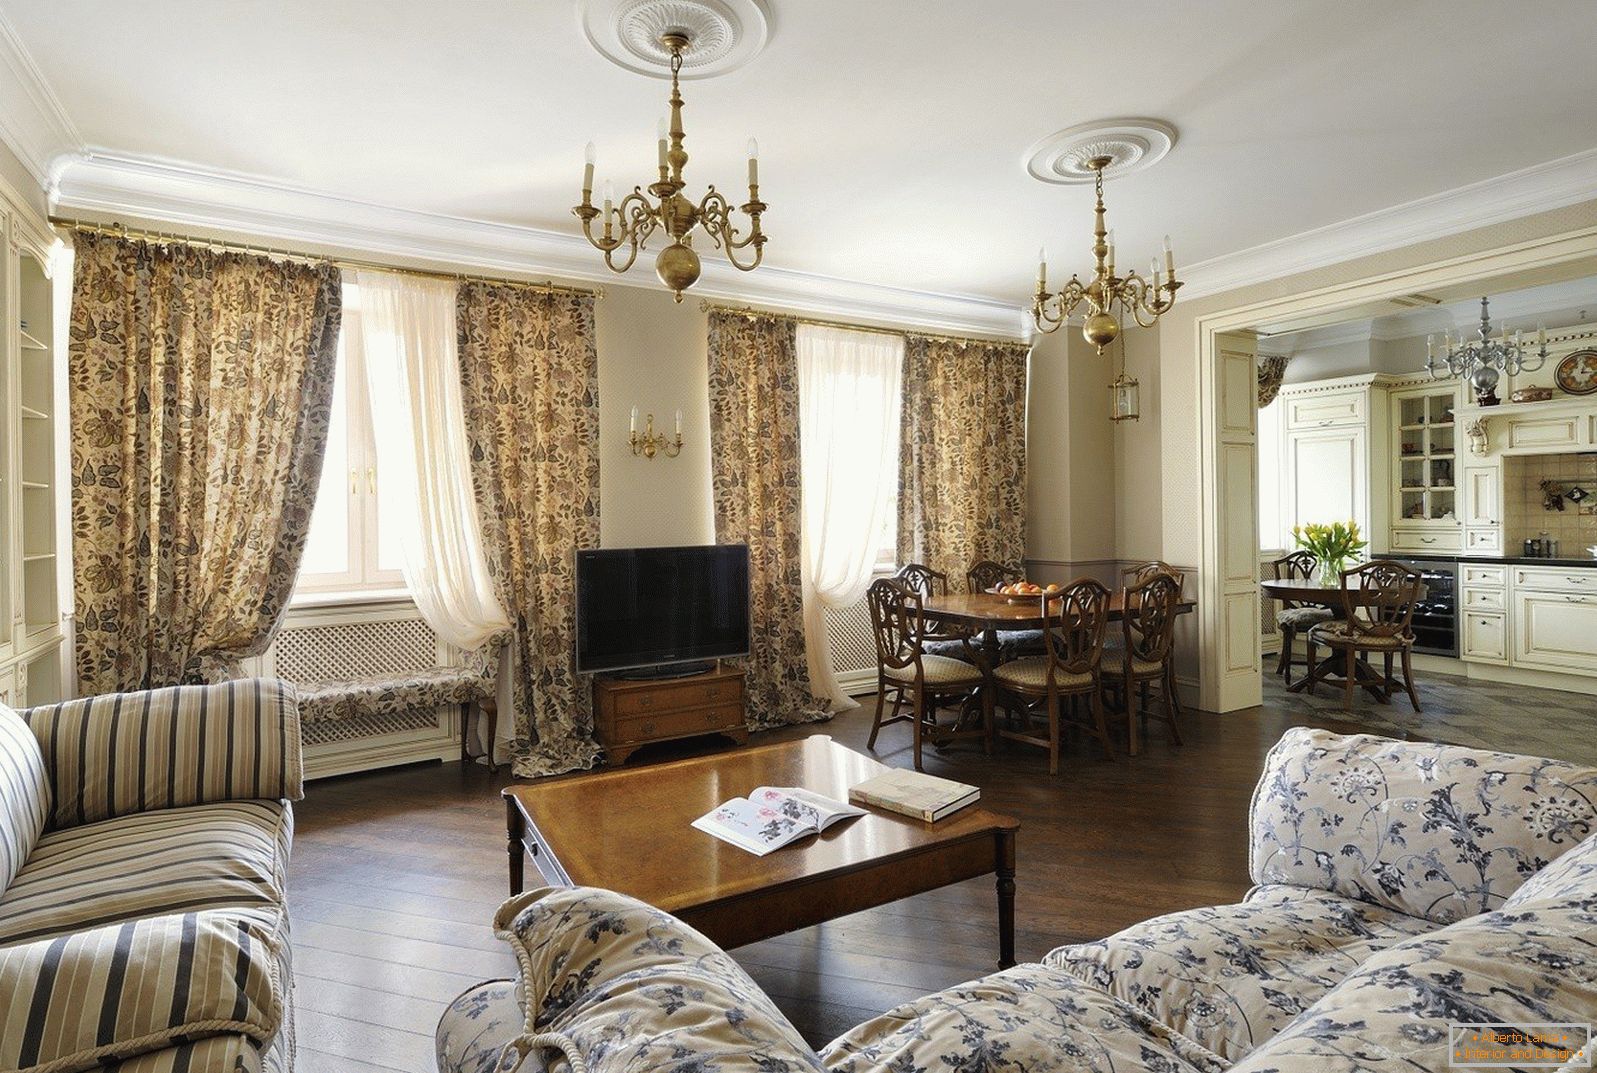 Sala de estar en estilo clásico con dos ventanas